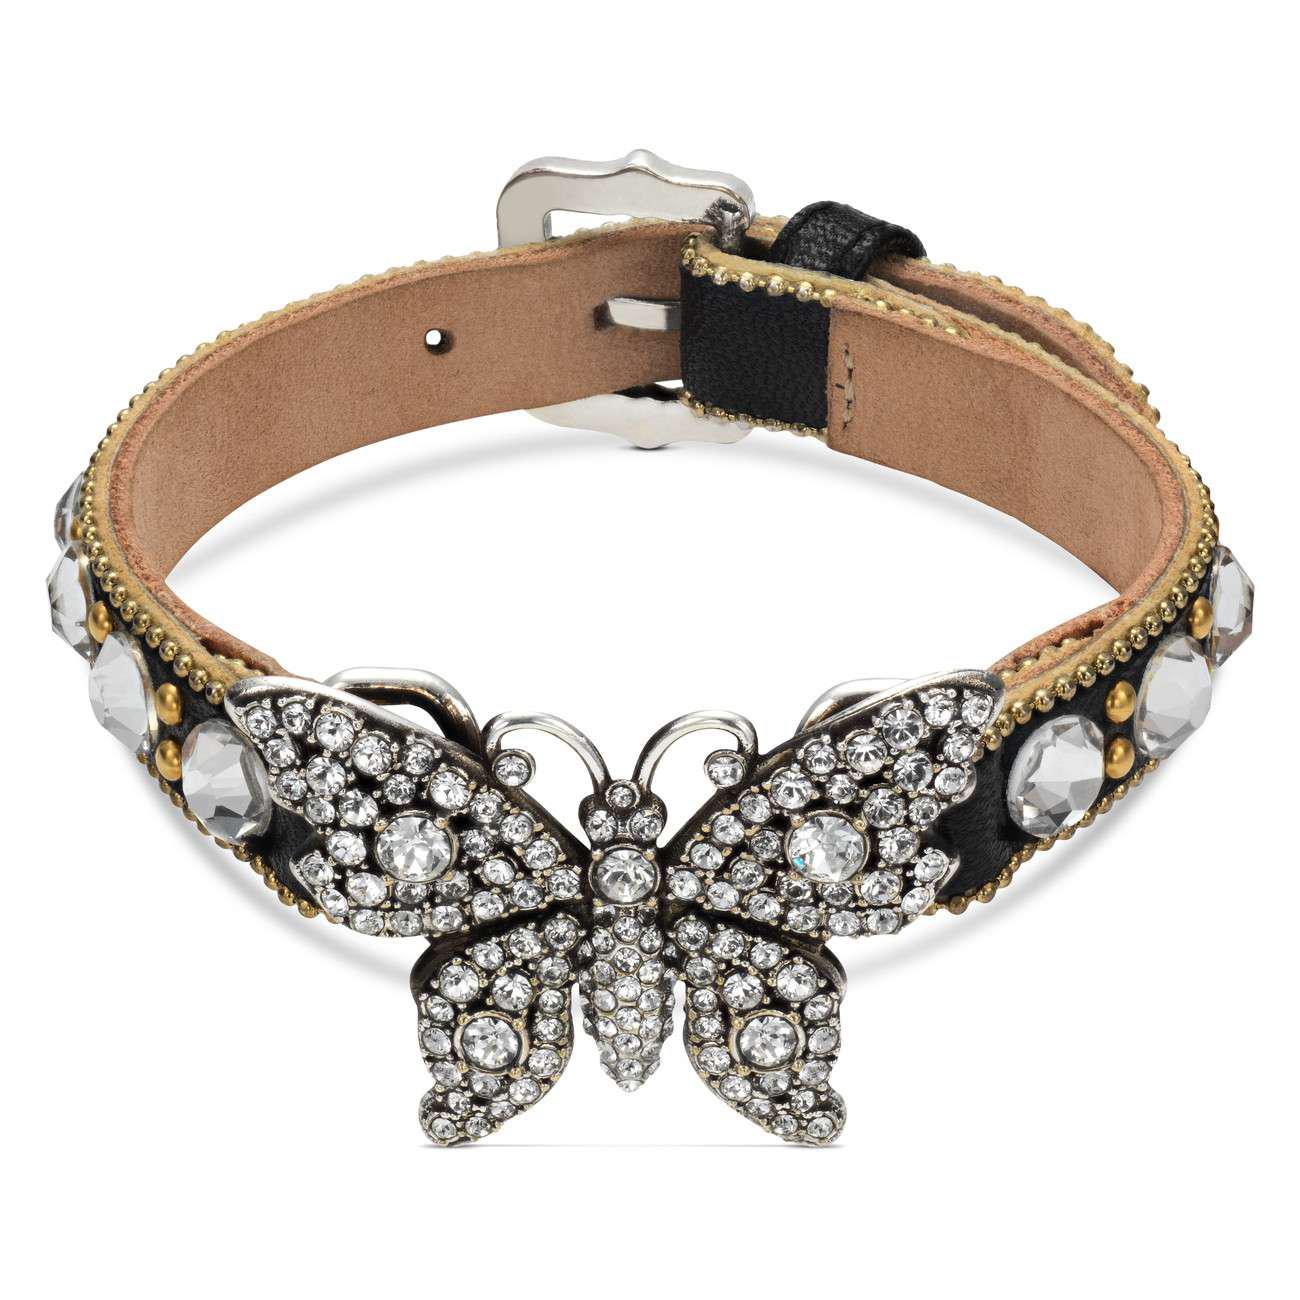 Silver 3D Butterfly Ankle Bracelet with Extensi... - Folksy